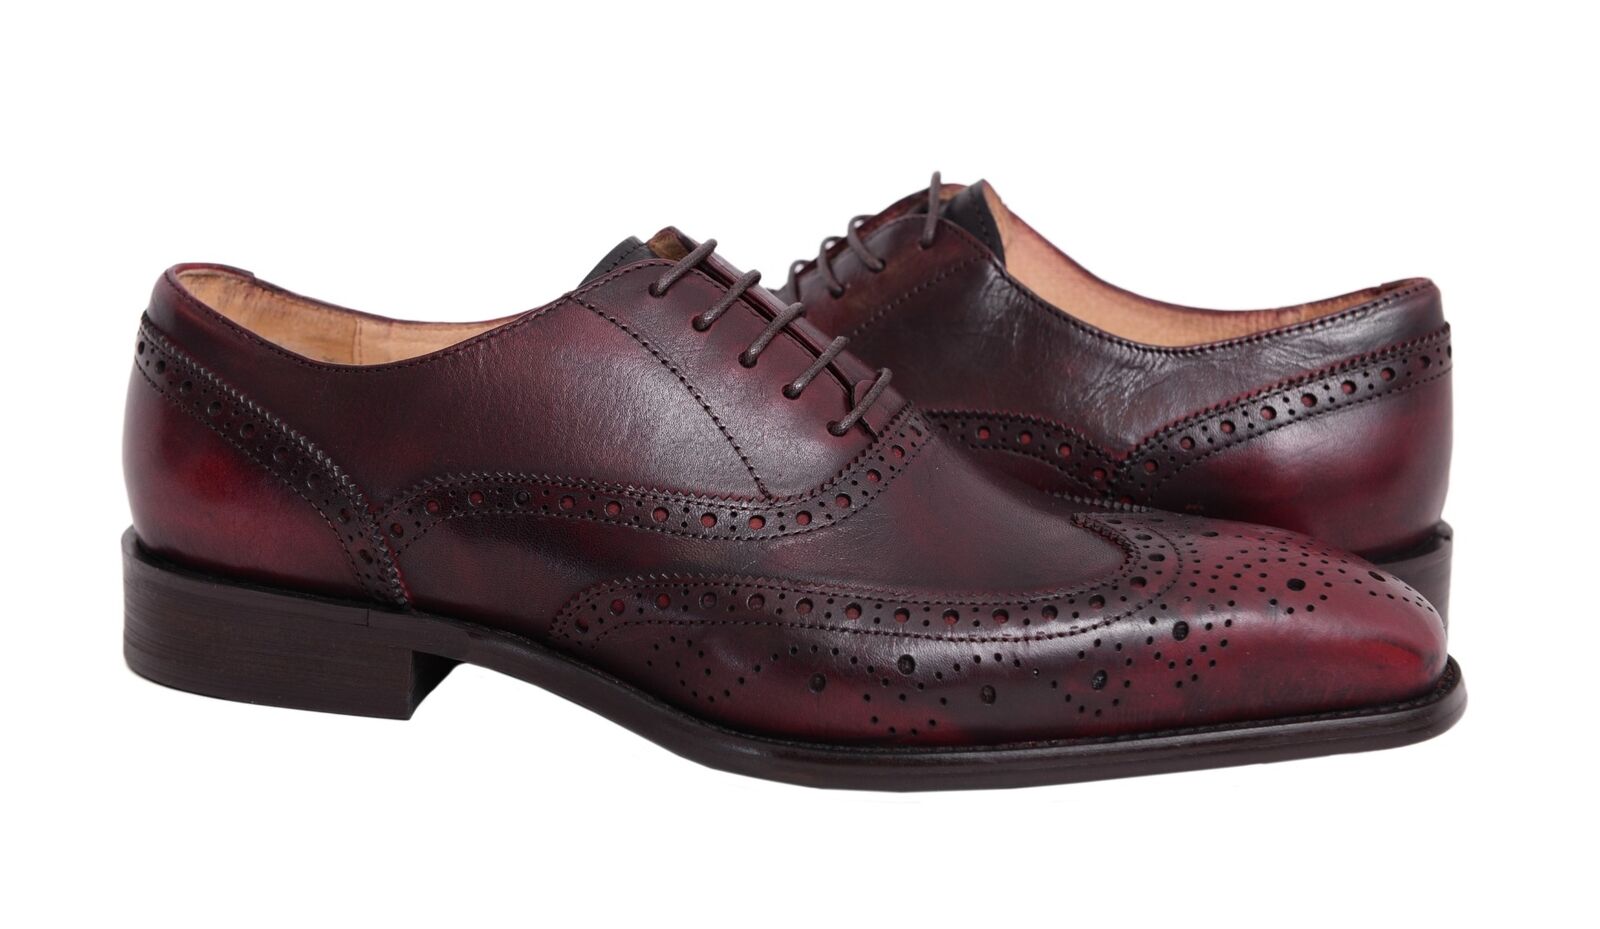 Mens 12 Mens Carrucci Burgundy Oxblood Wingtip Oxford Leather Dress Shoes